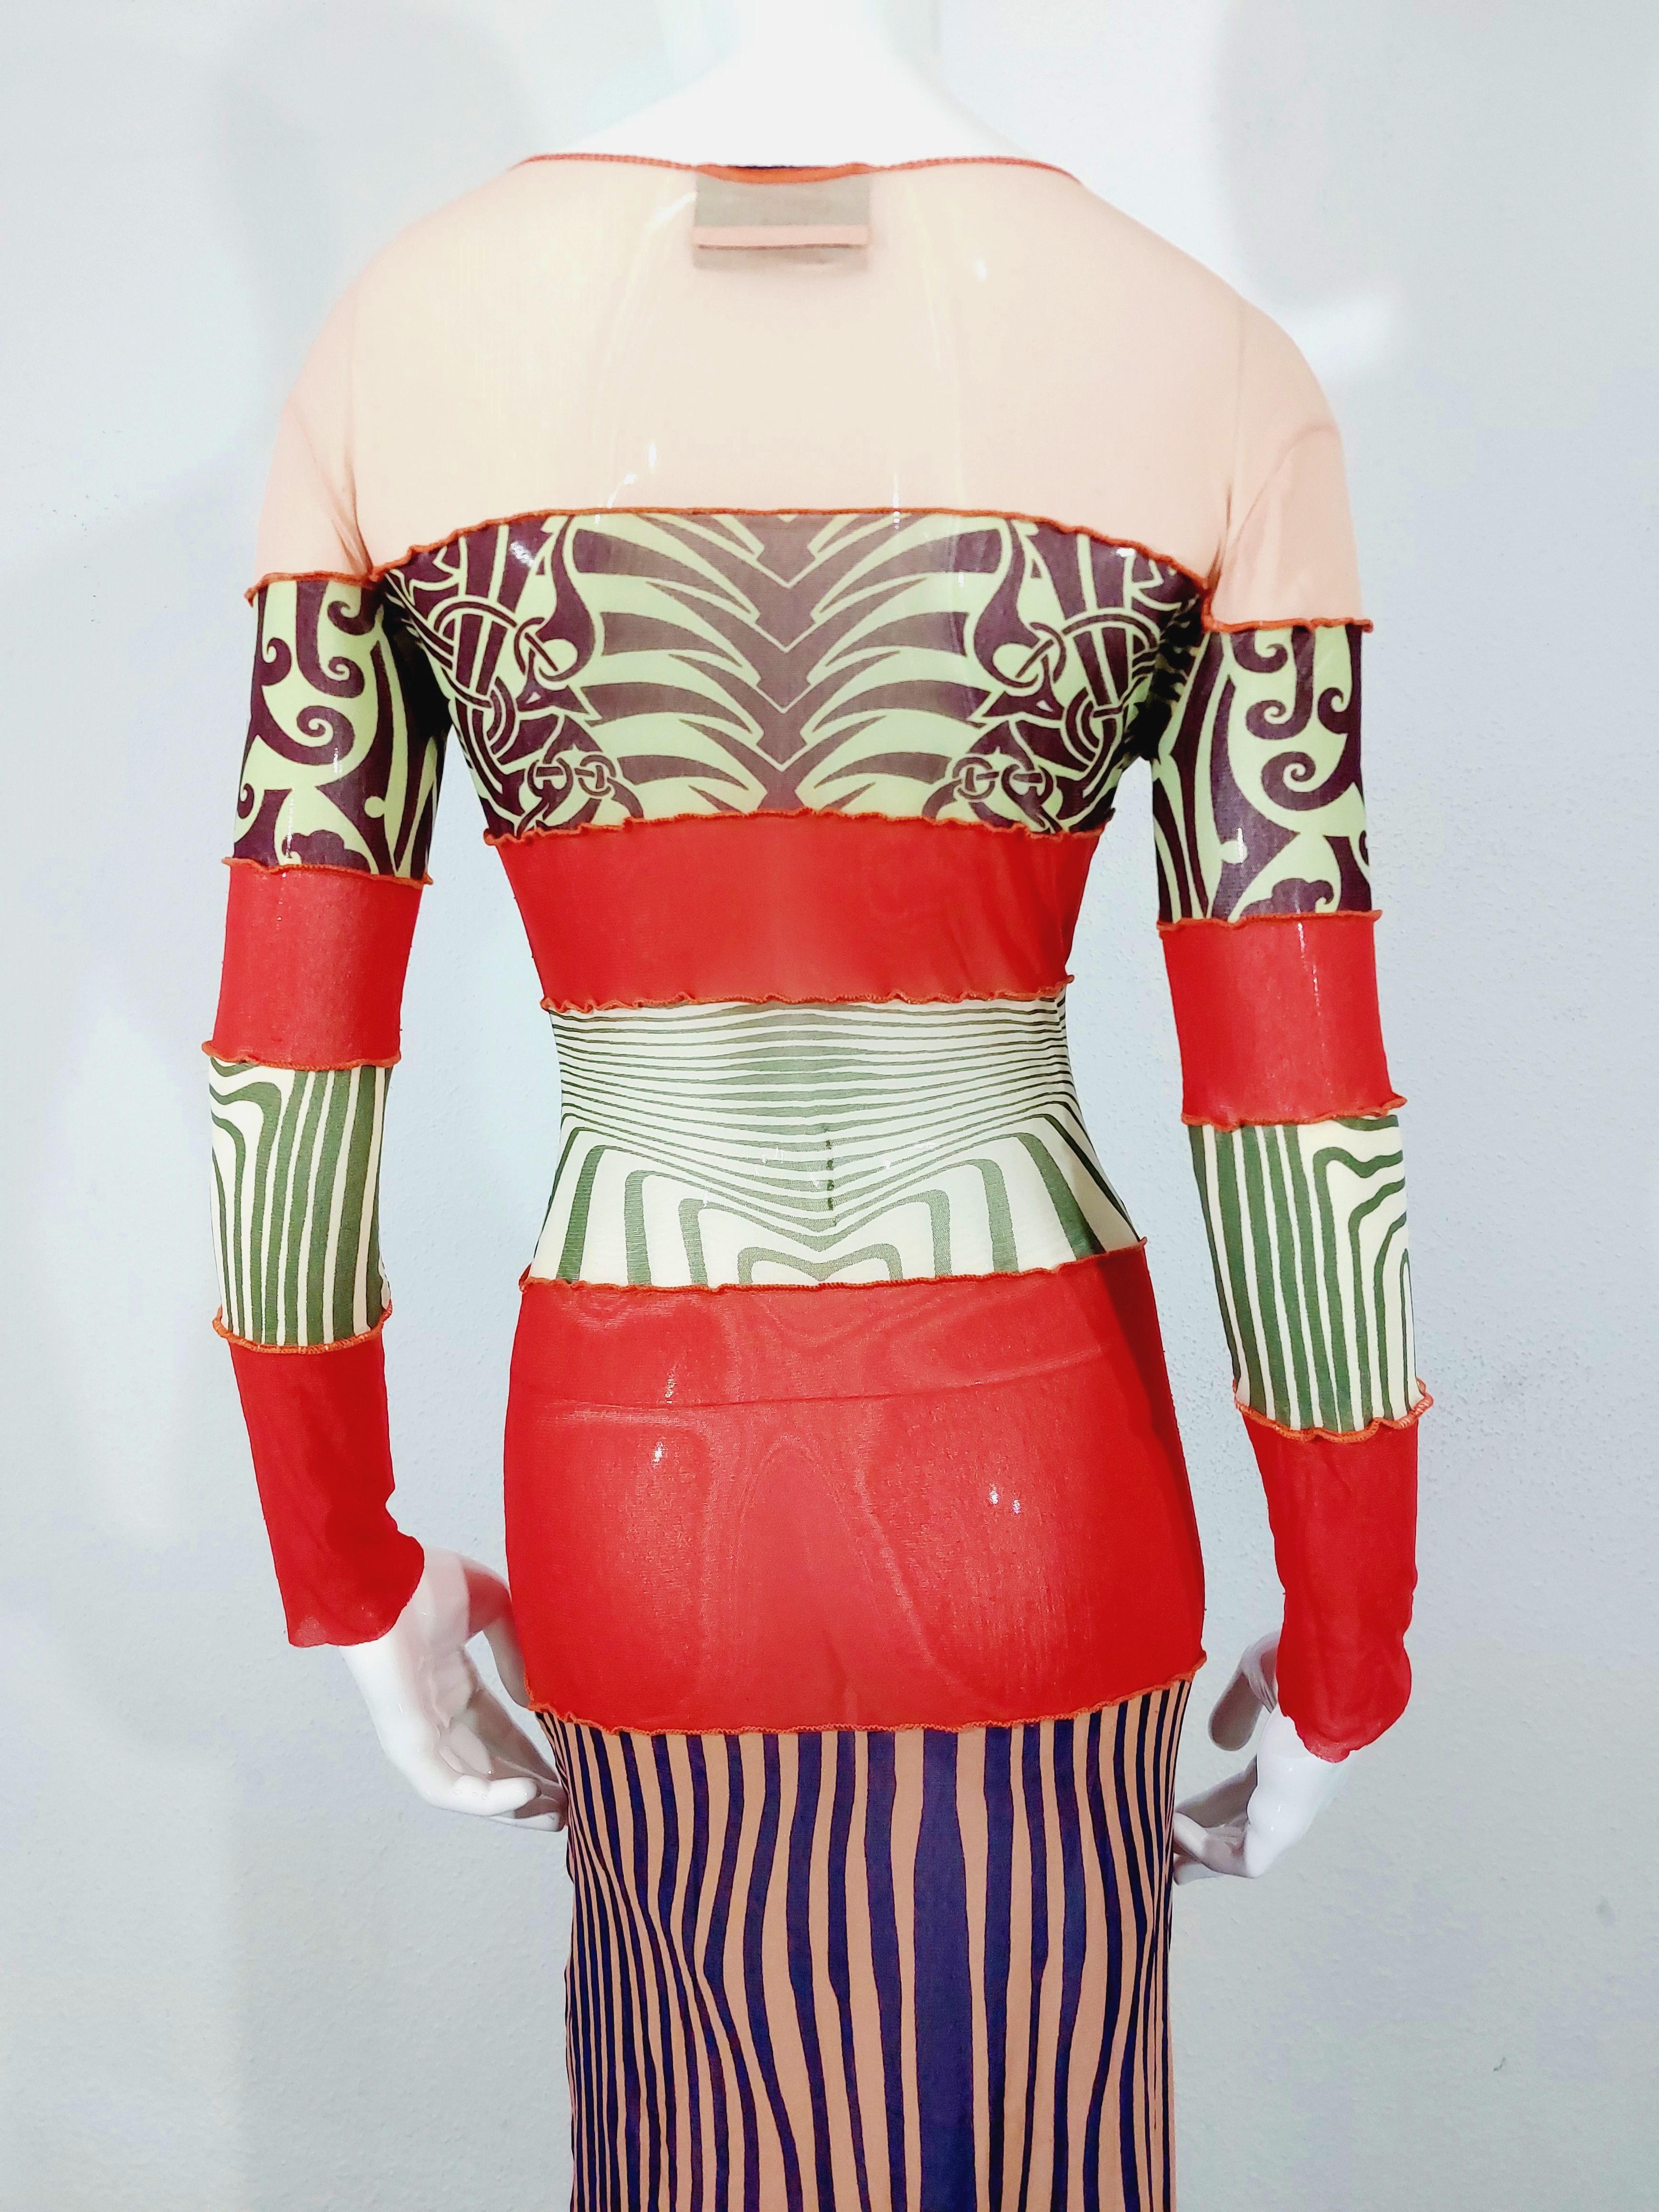 Jean Paul Gaultier Optical Illusion Nude Ethic Trompe l'oeil Vanessa Guide Dress For Sale 7